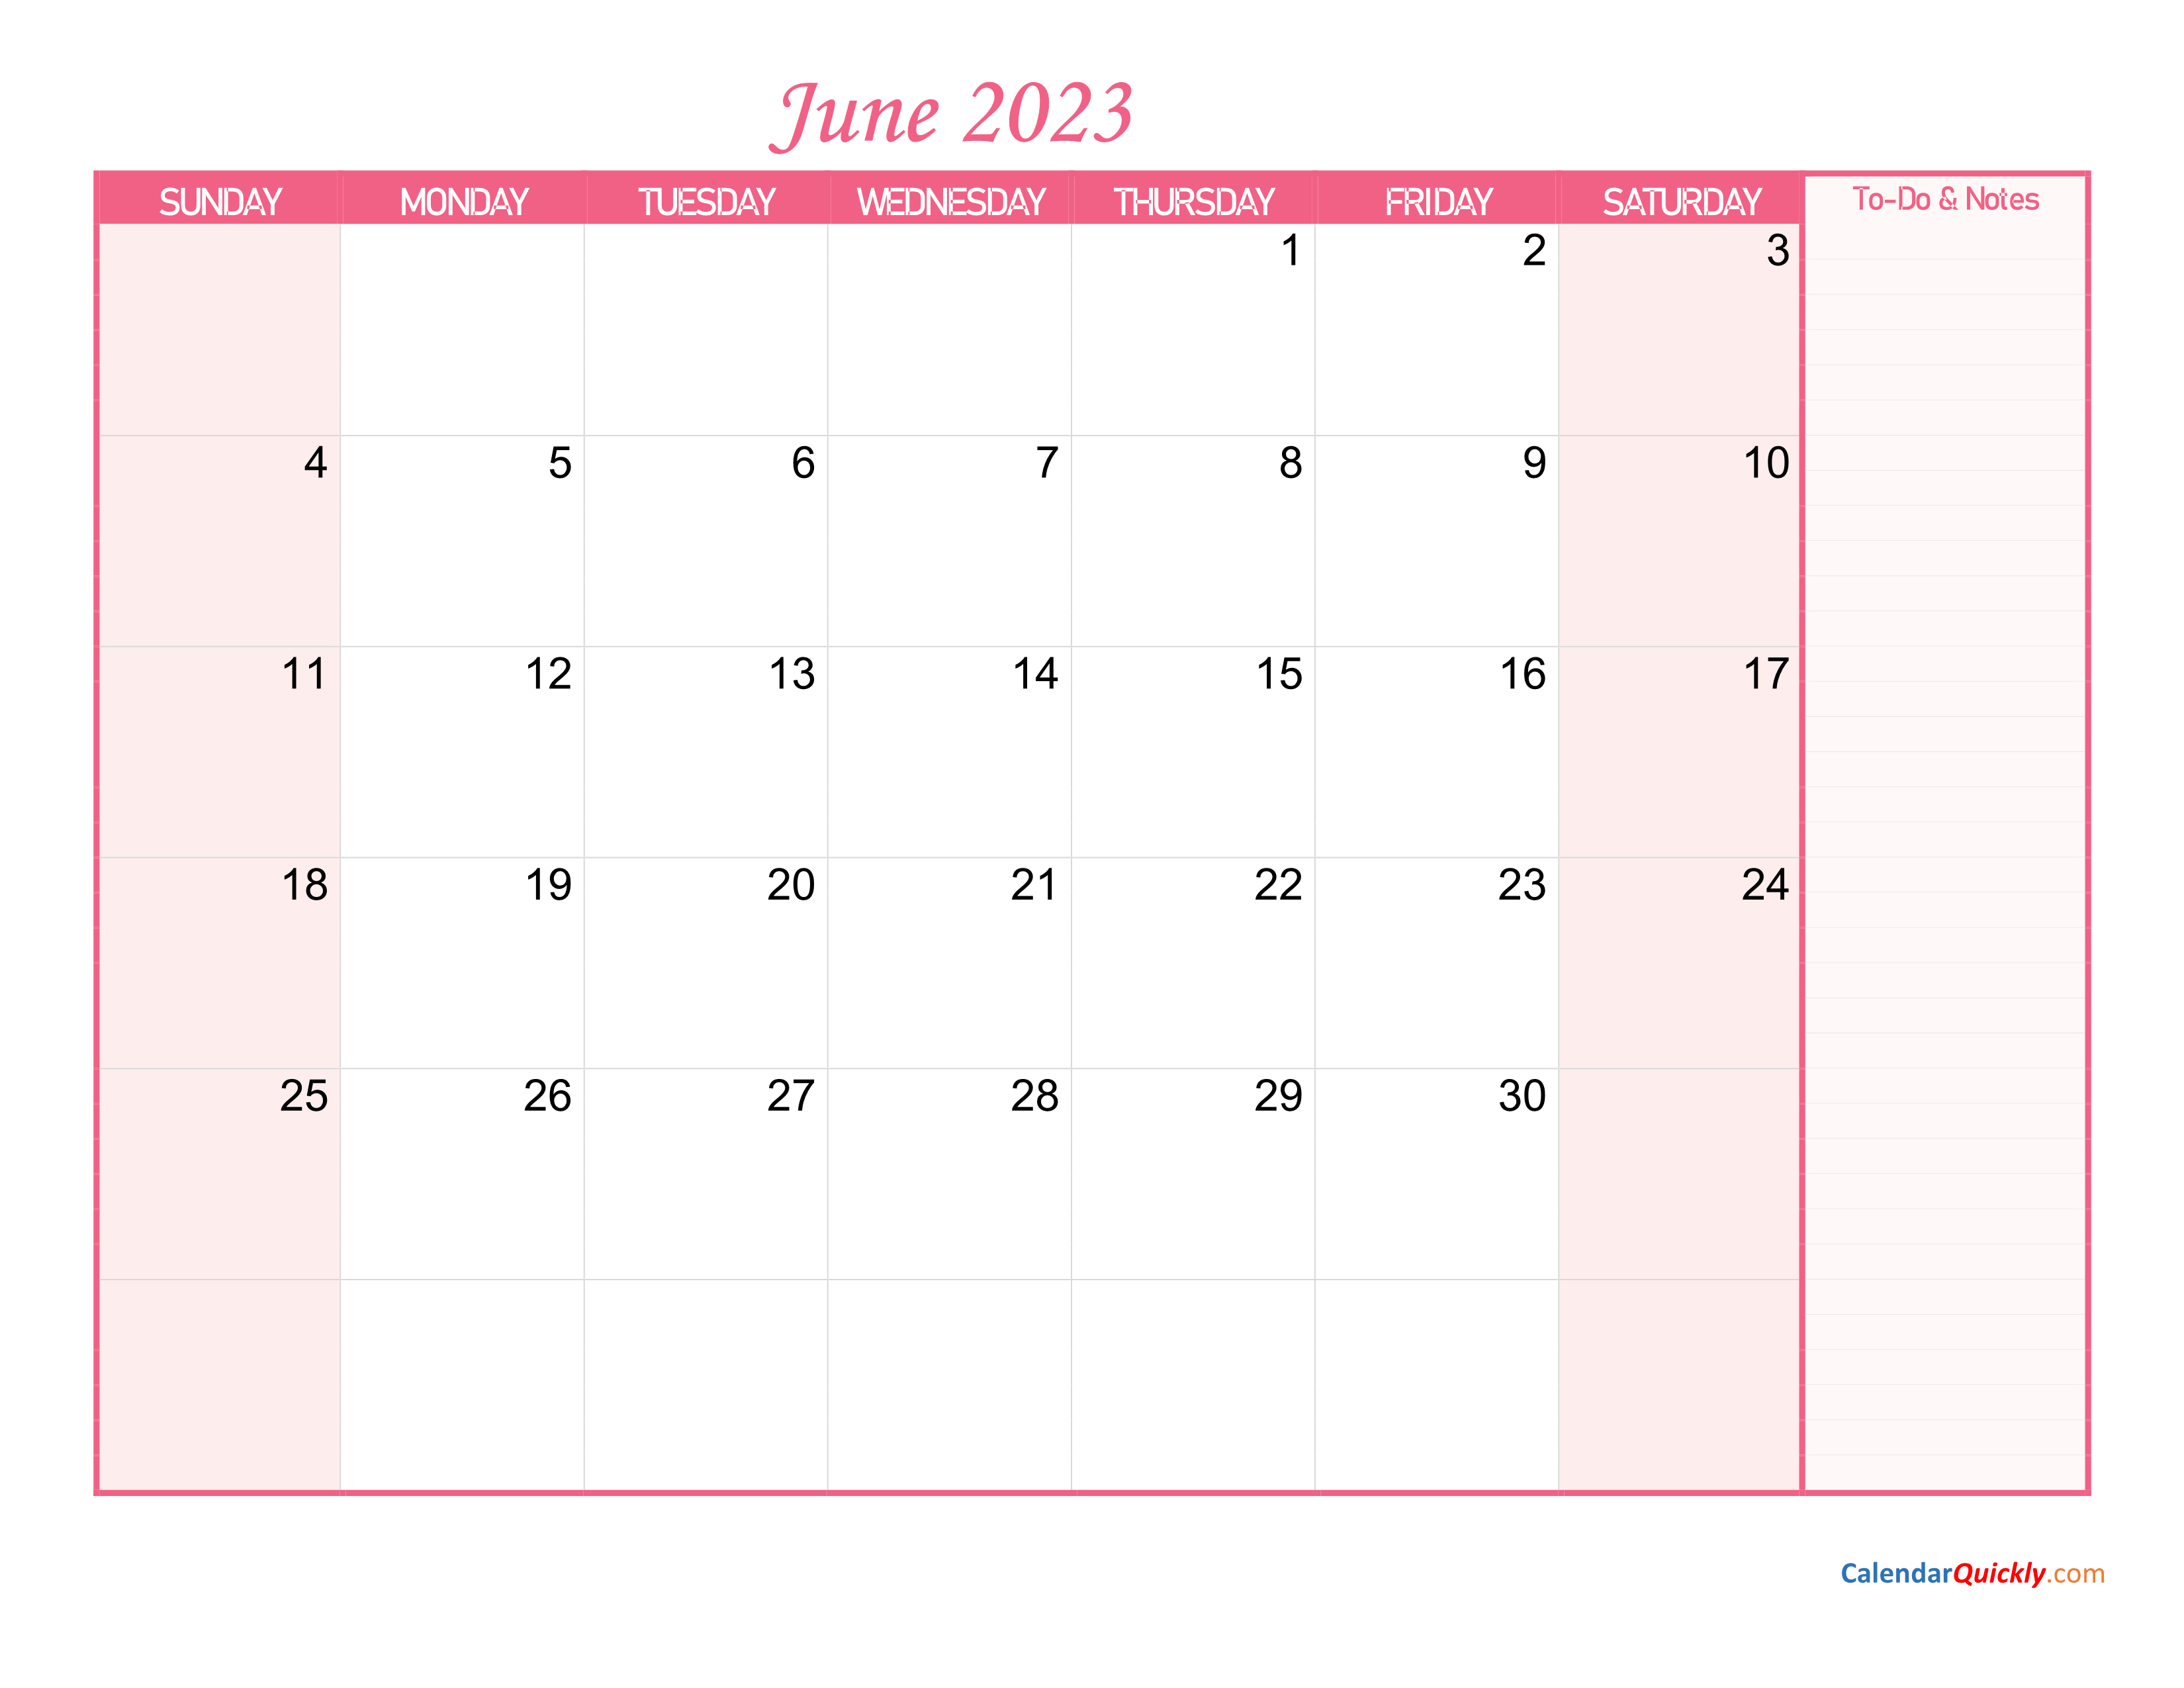 june-calendar-2023-with-notes-calendar-quickly